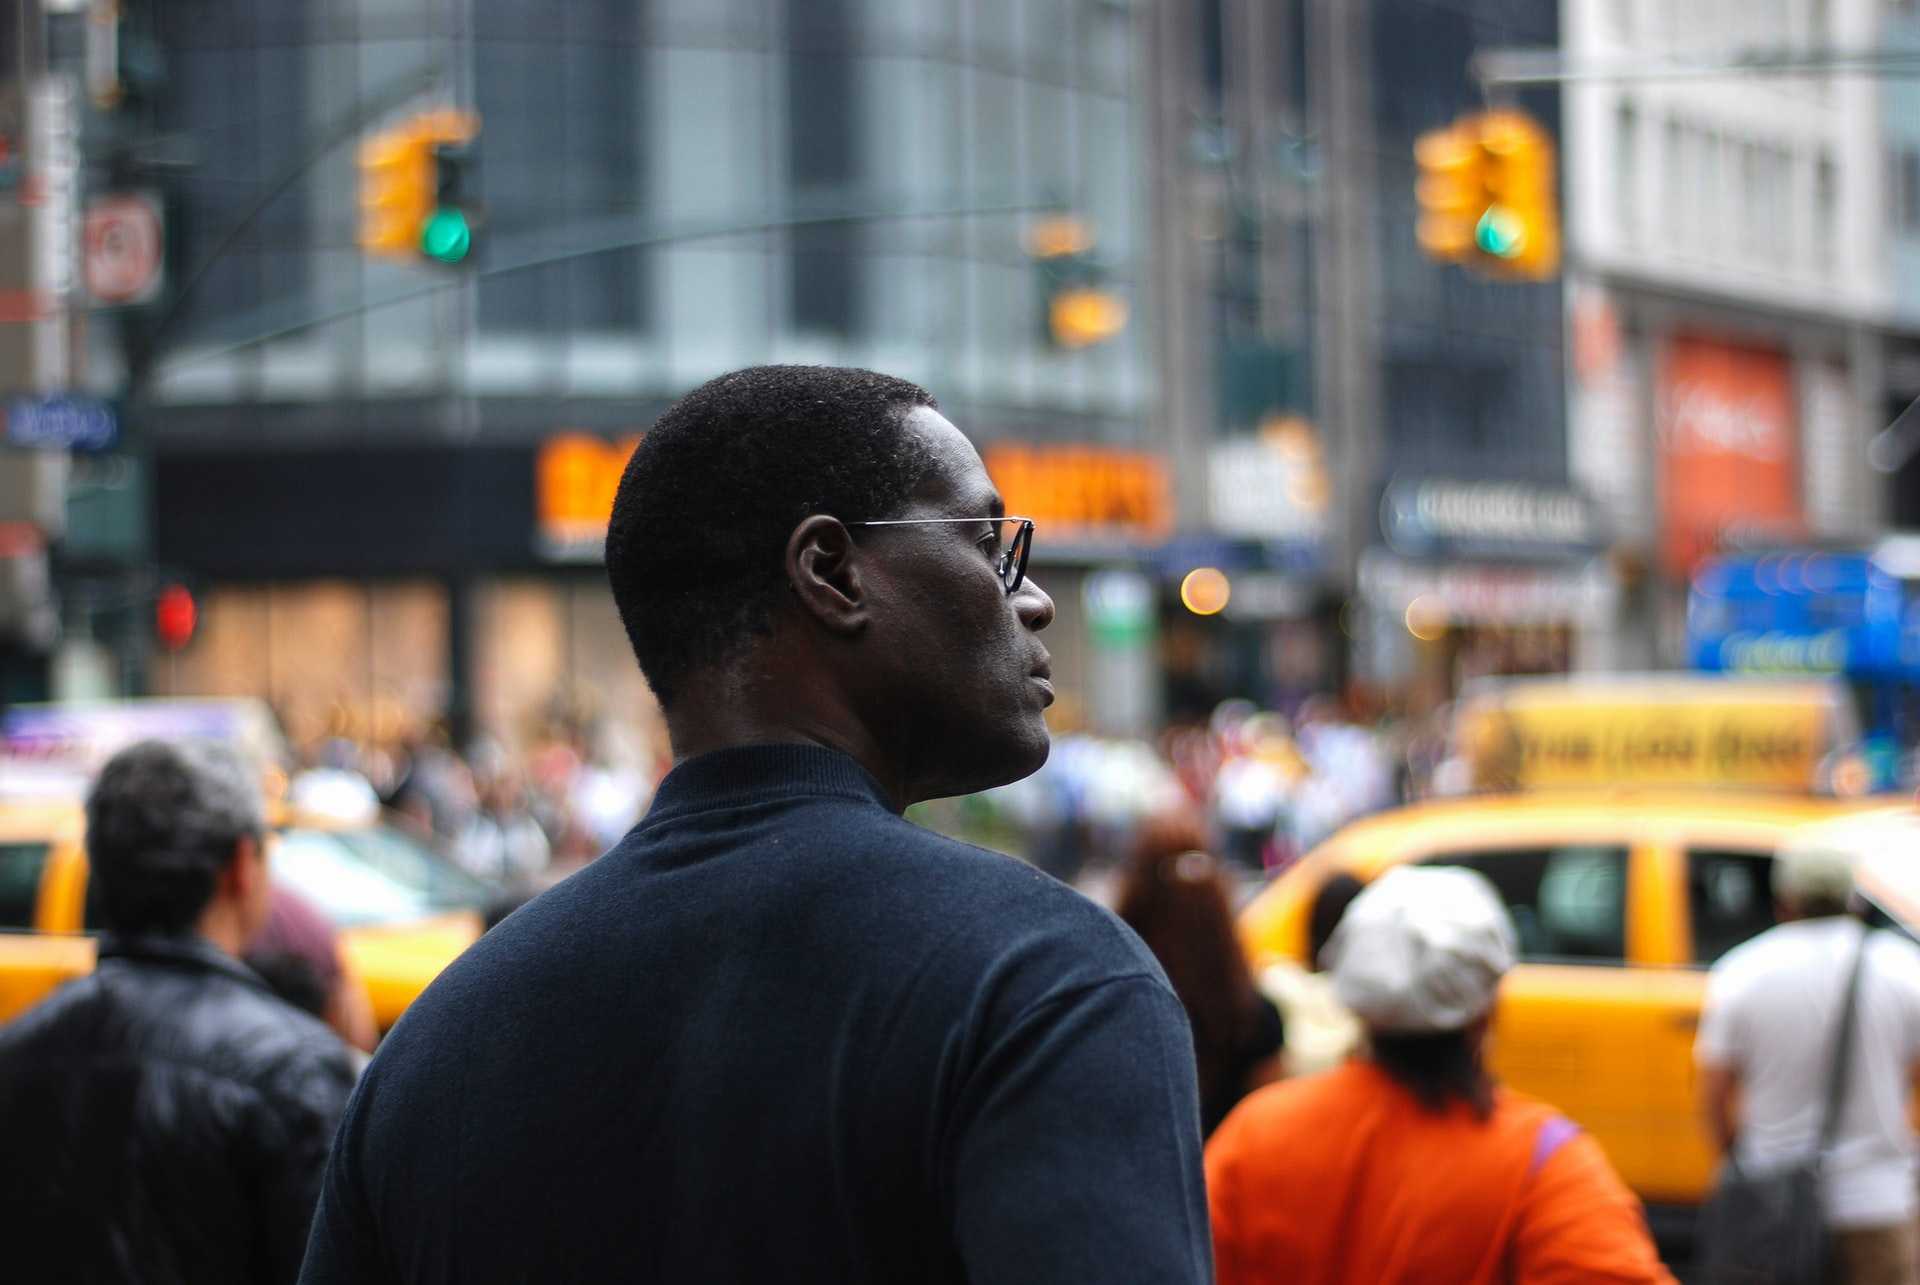  A young black man gazing